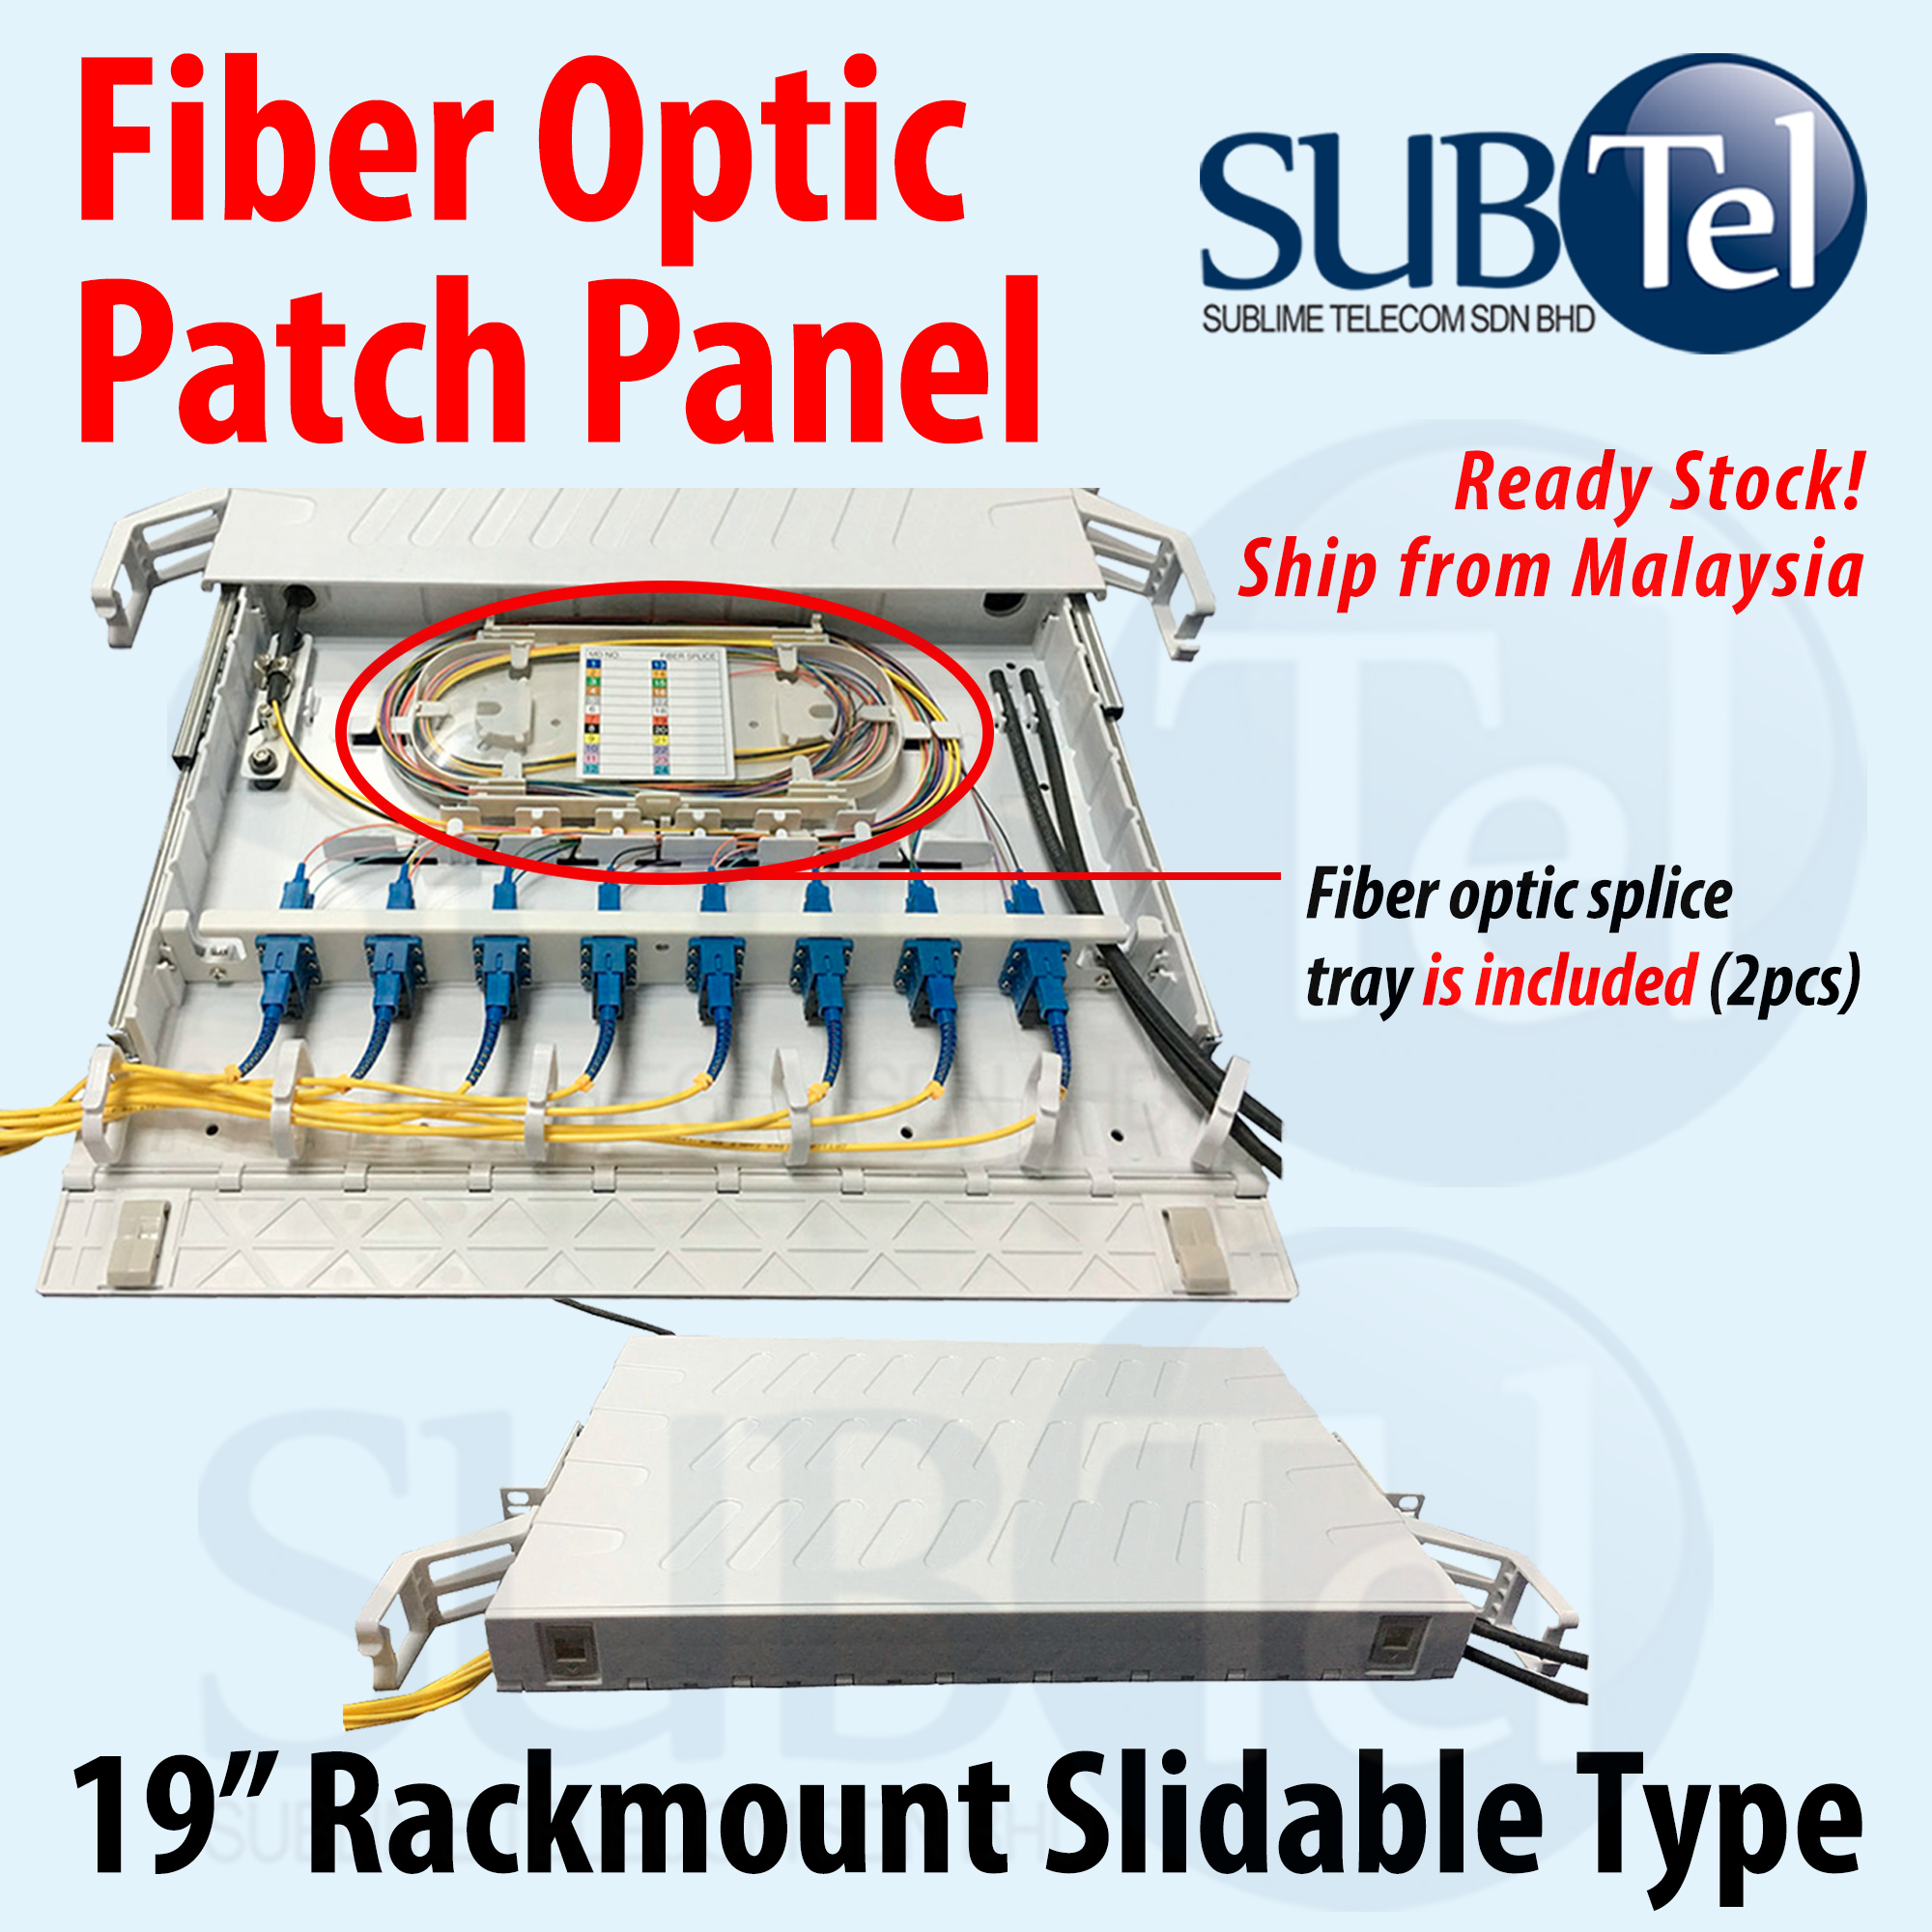 1U 24 Port Fiber Optic Patch Panel 19" Rackmount Slidable Type with SC